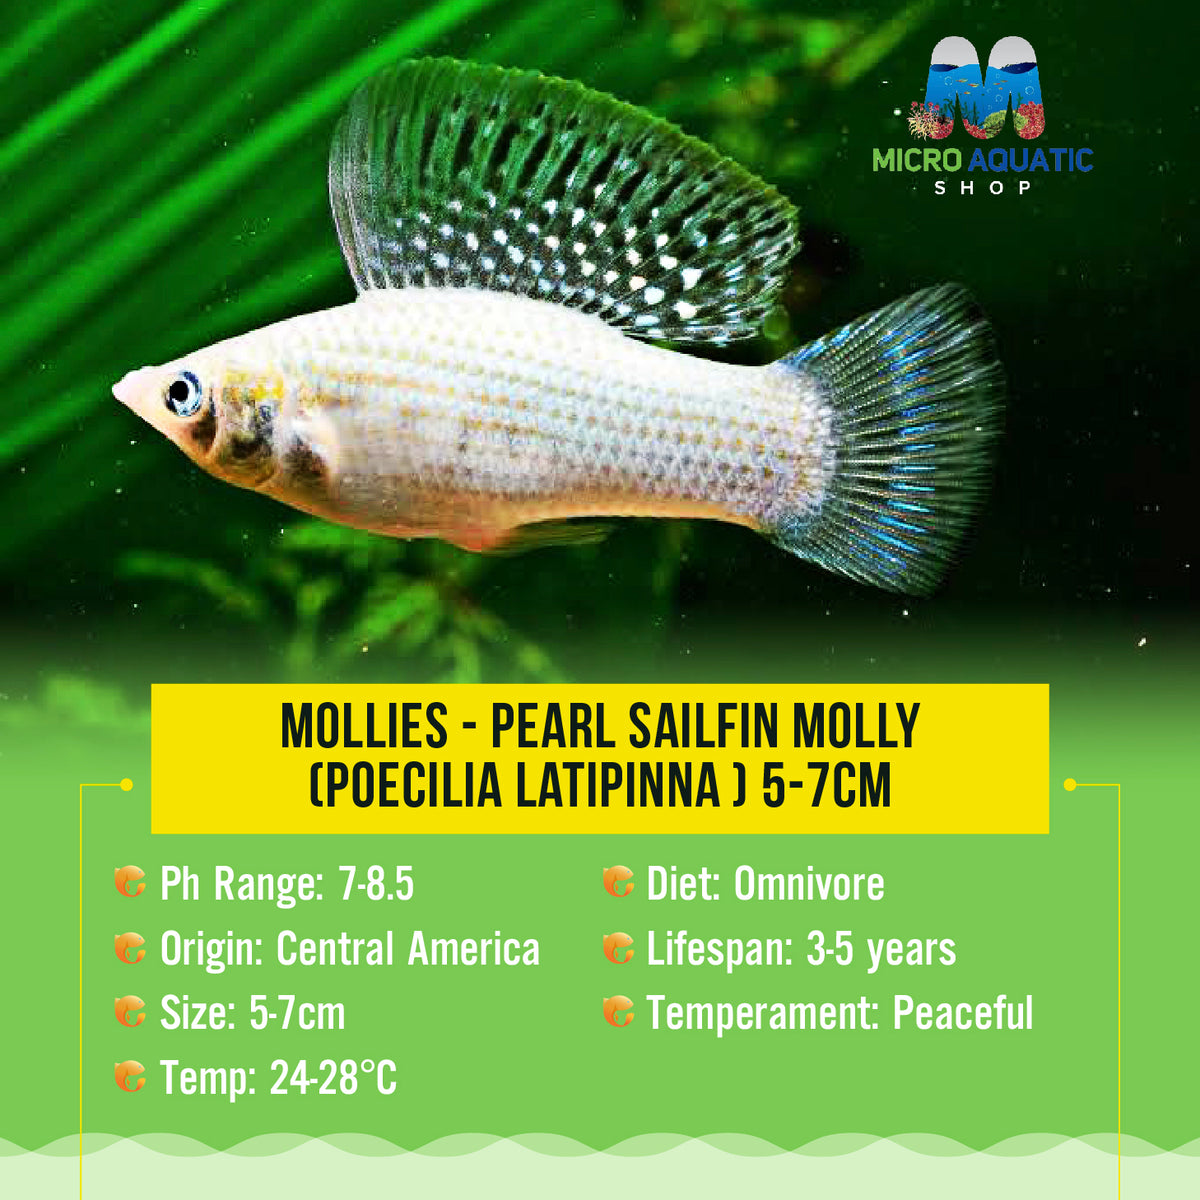 Mollies – Pearl Sailfin Molly (Poecilia latipinna ) 5-7cm